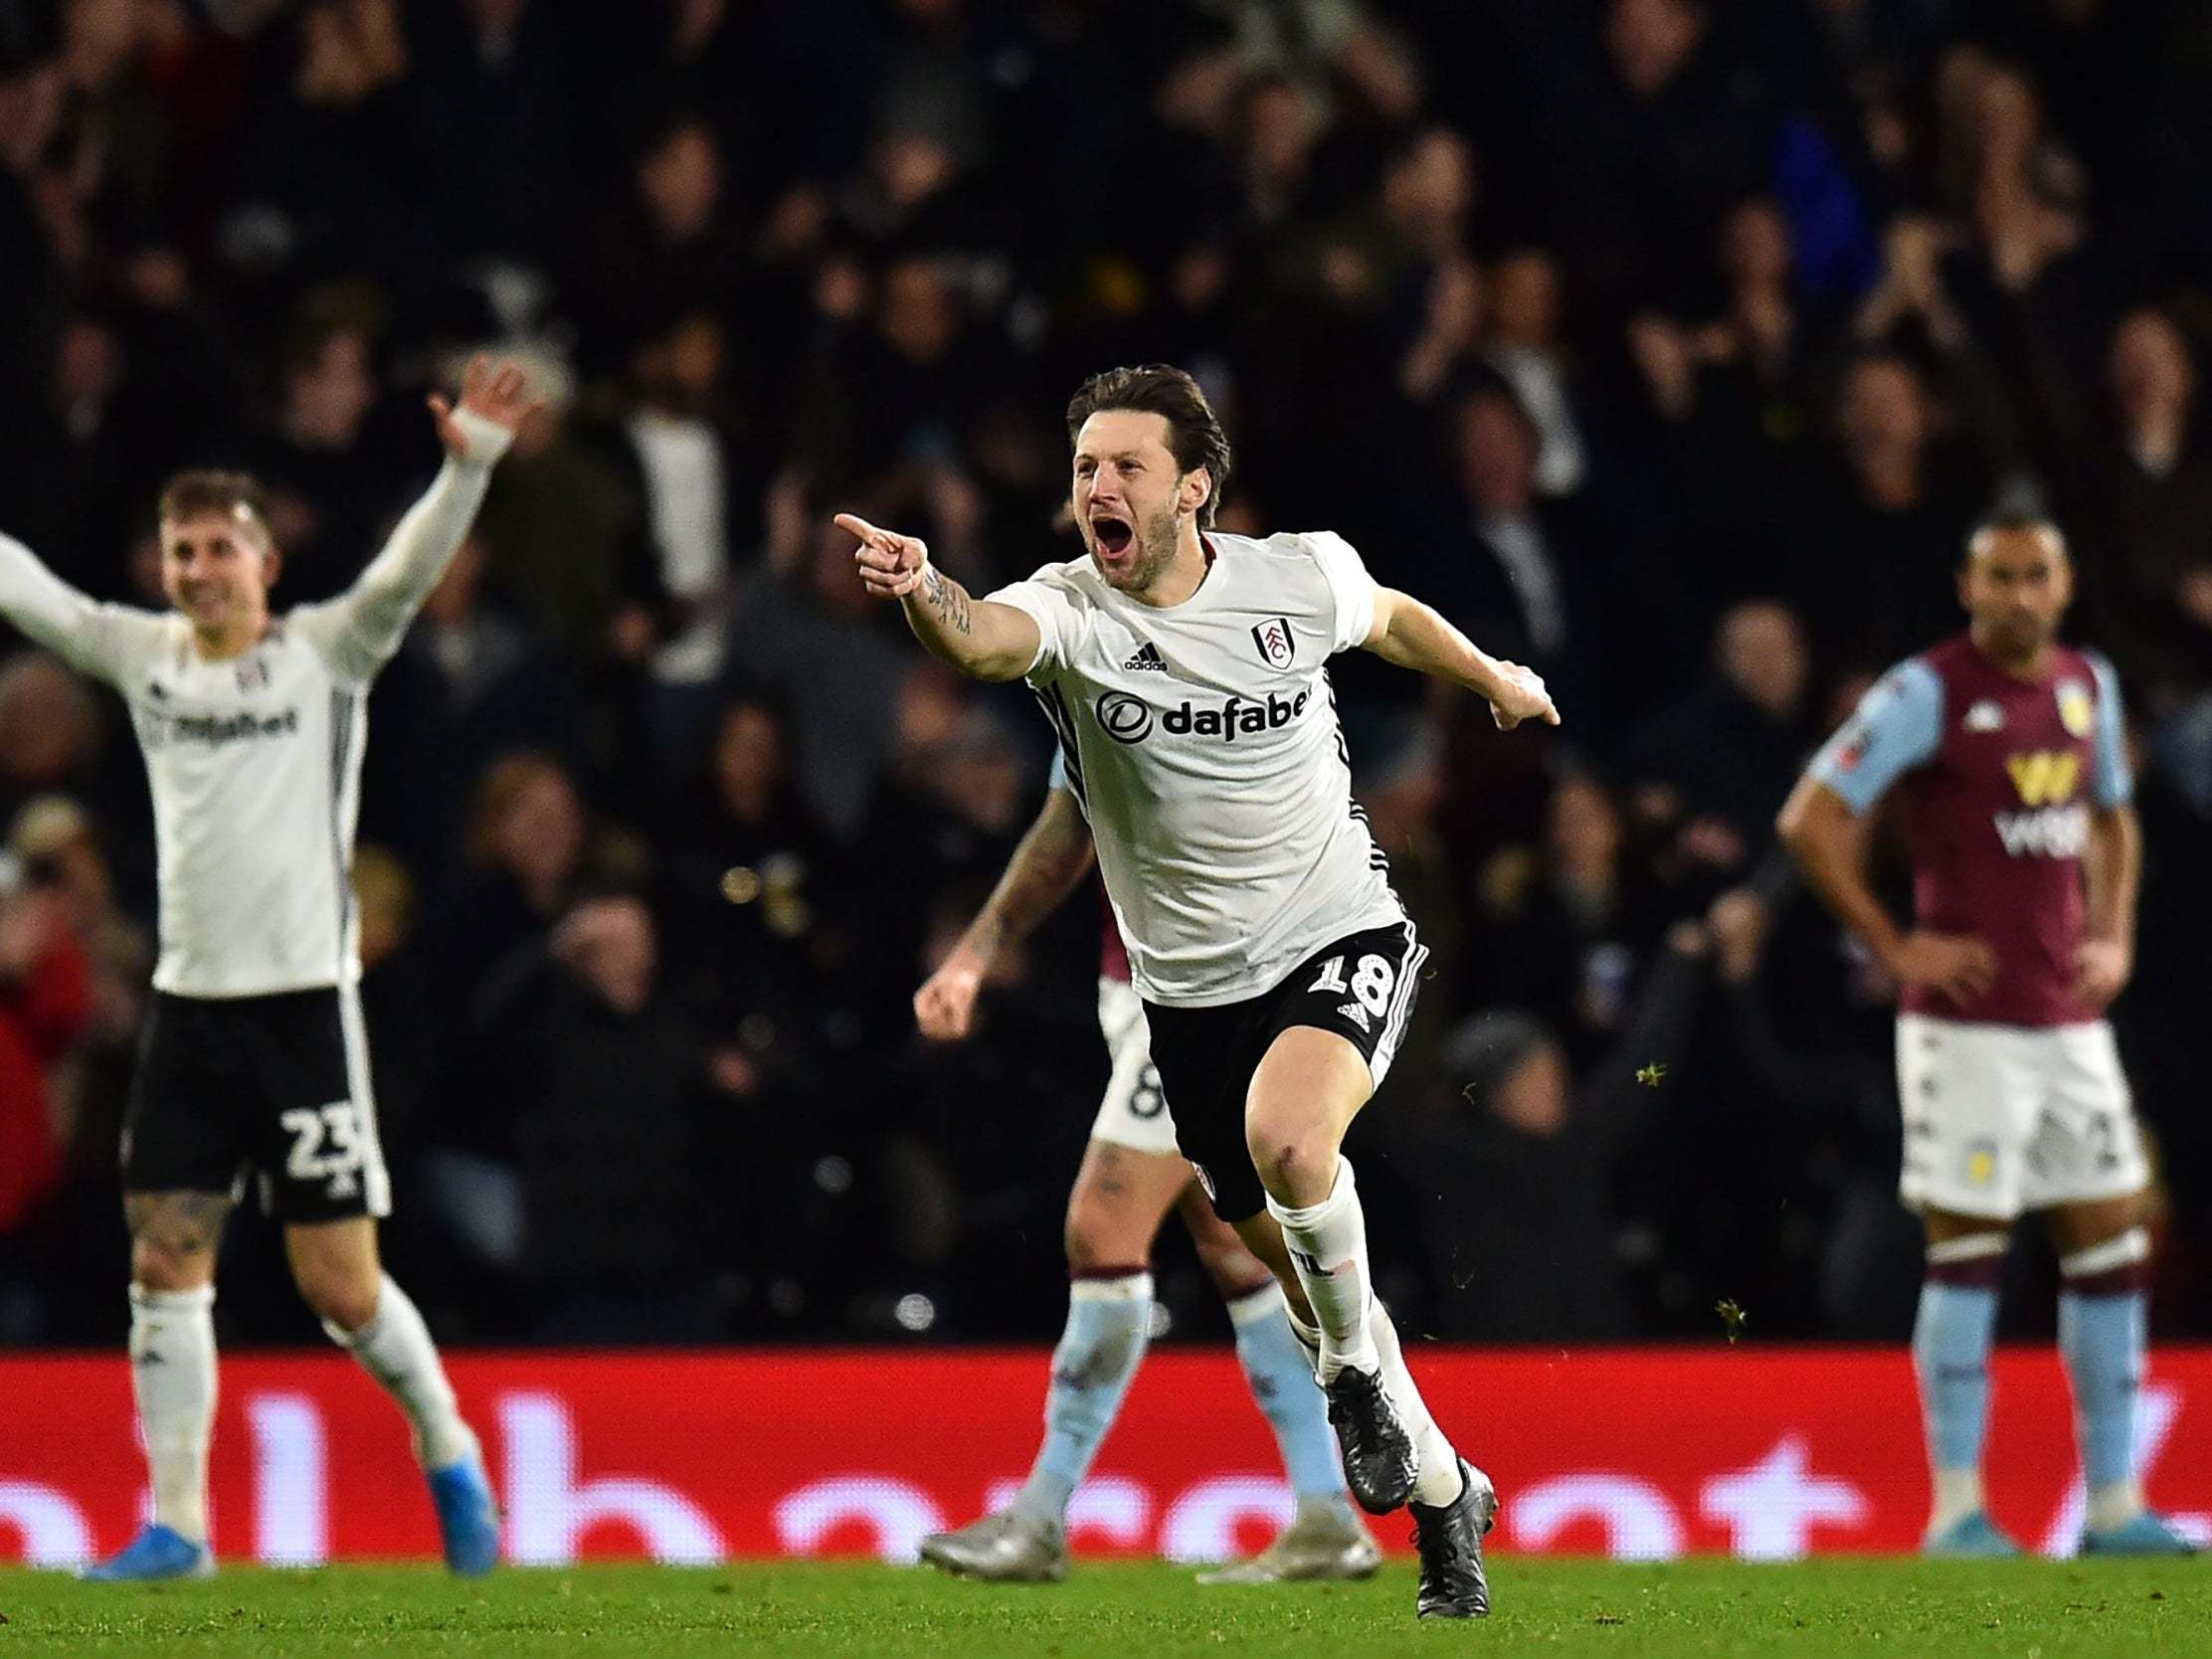 Harry Arter celebrates after lashing home Fulham's winner against Aston Villa